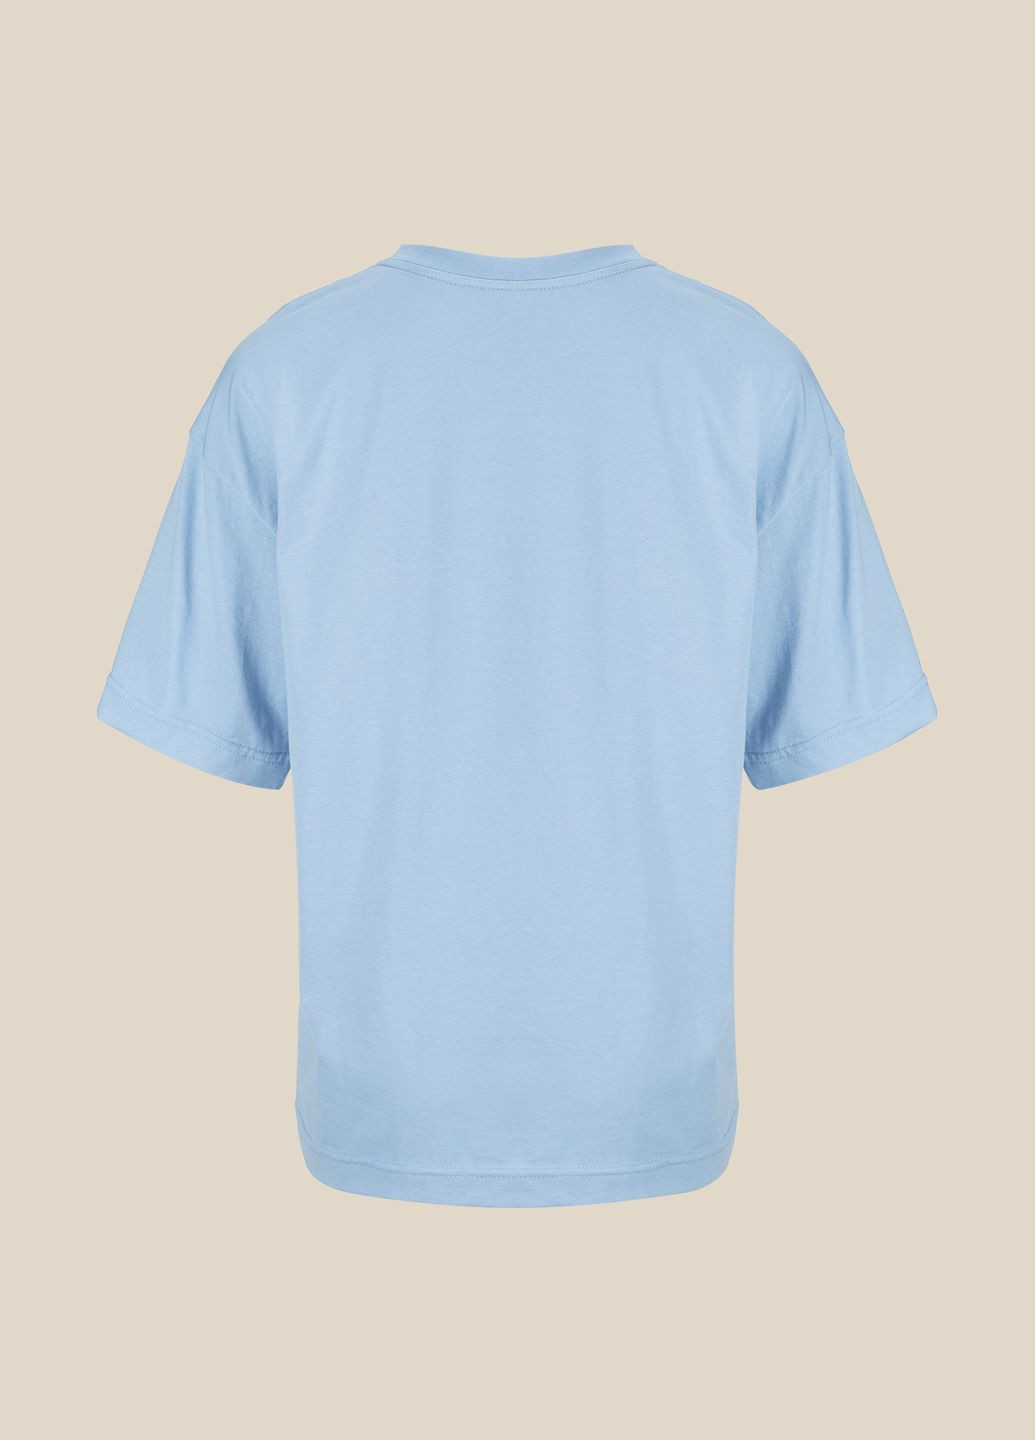 Голубая летняя футболка LAWA